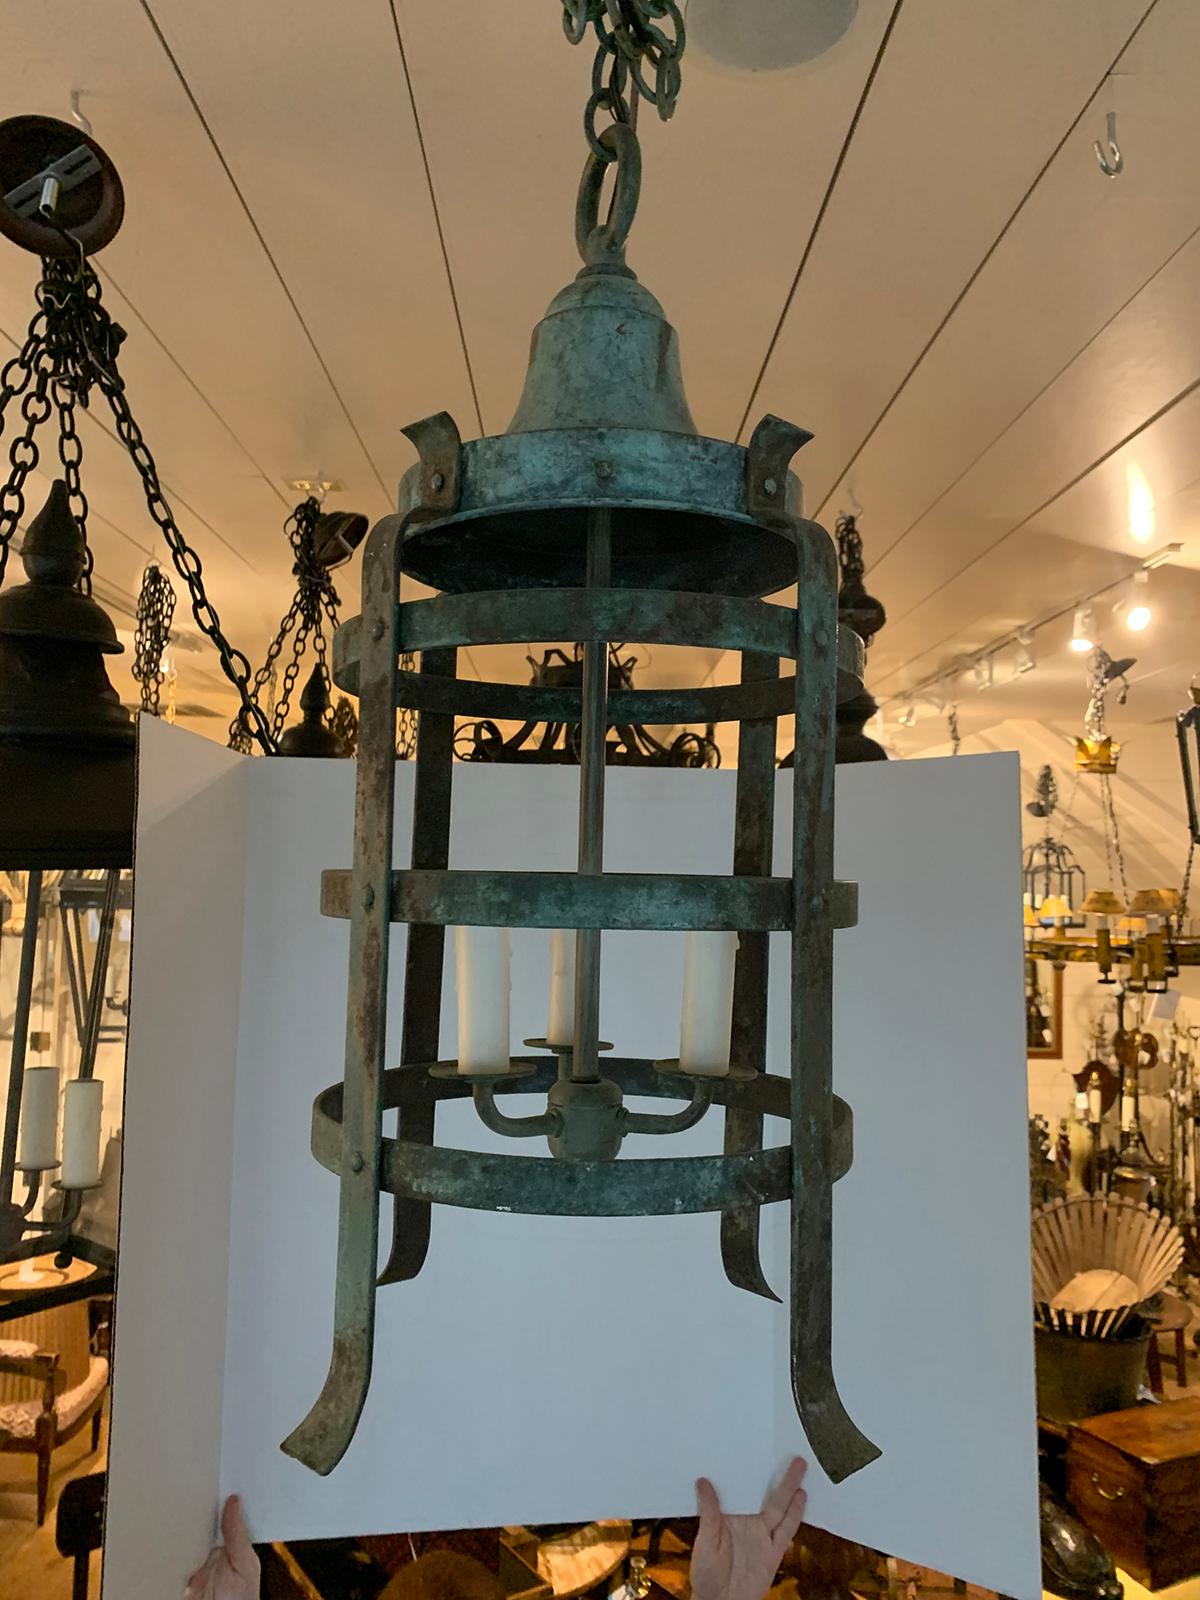 20th century iron three-light lantern with worn celadon finish
New wiring
No glass.